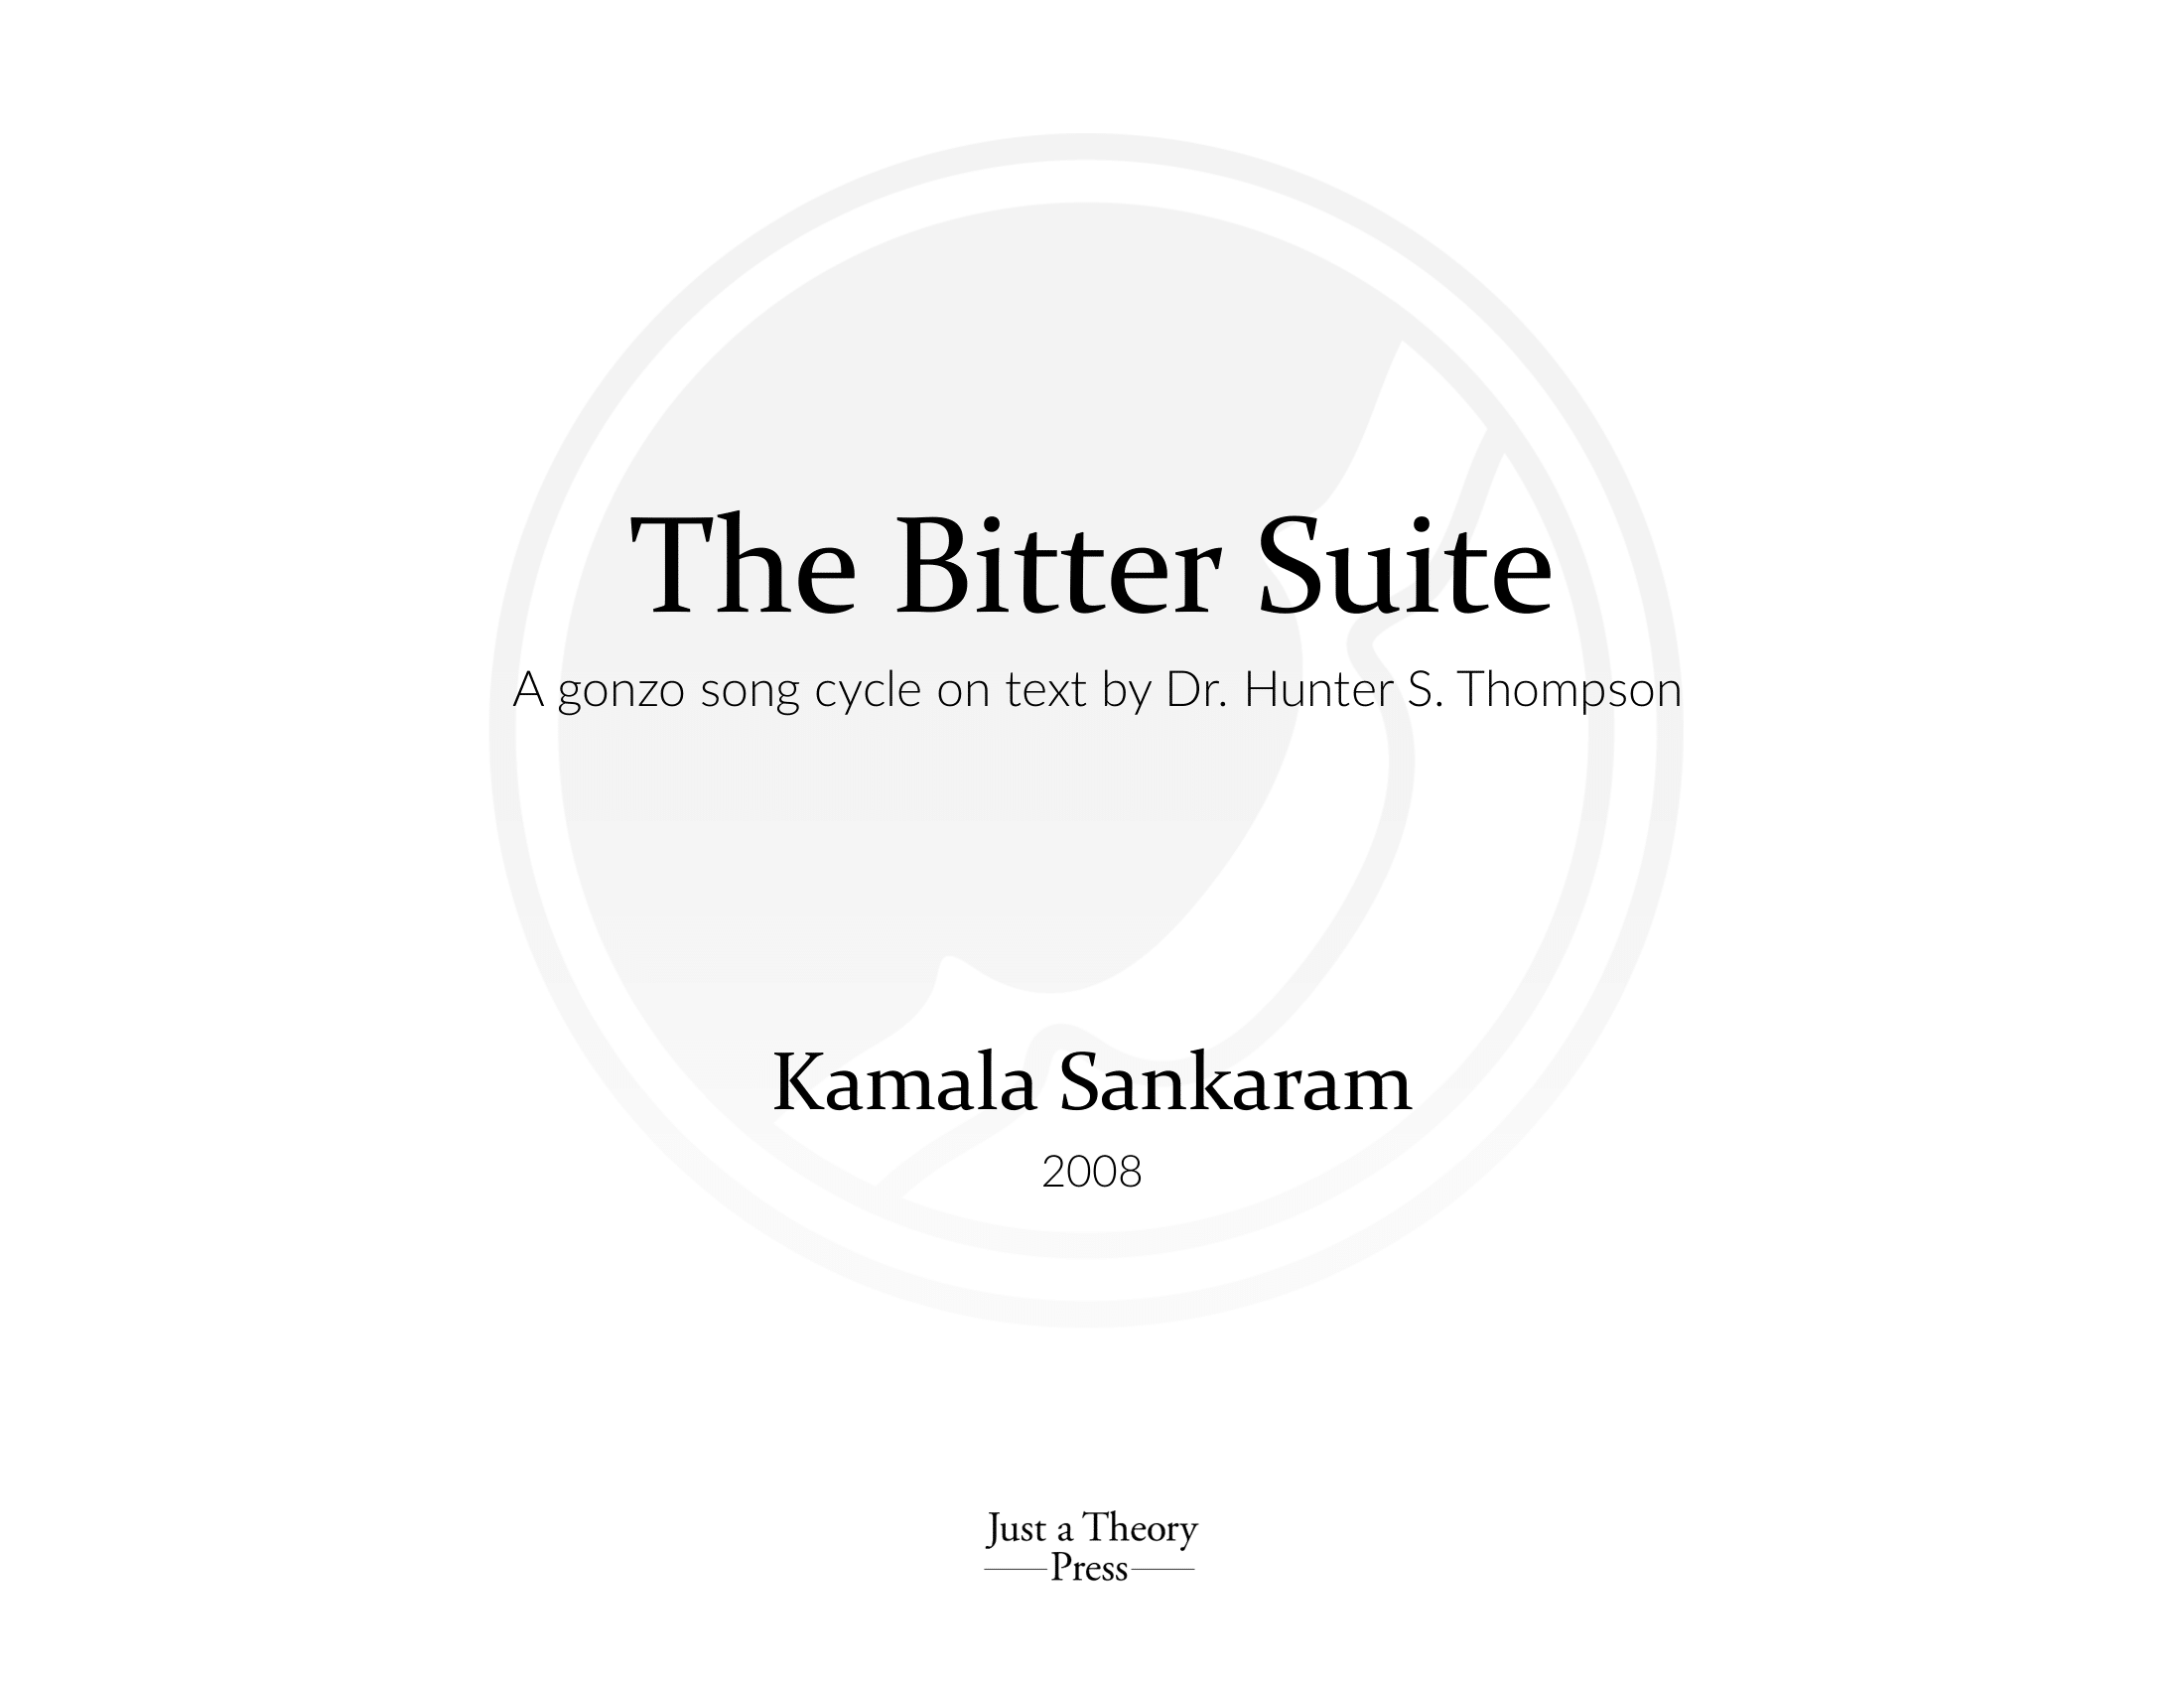 Bitter Suite